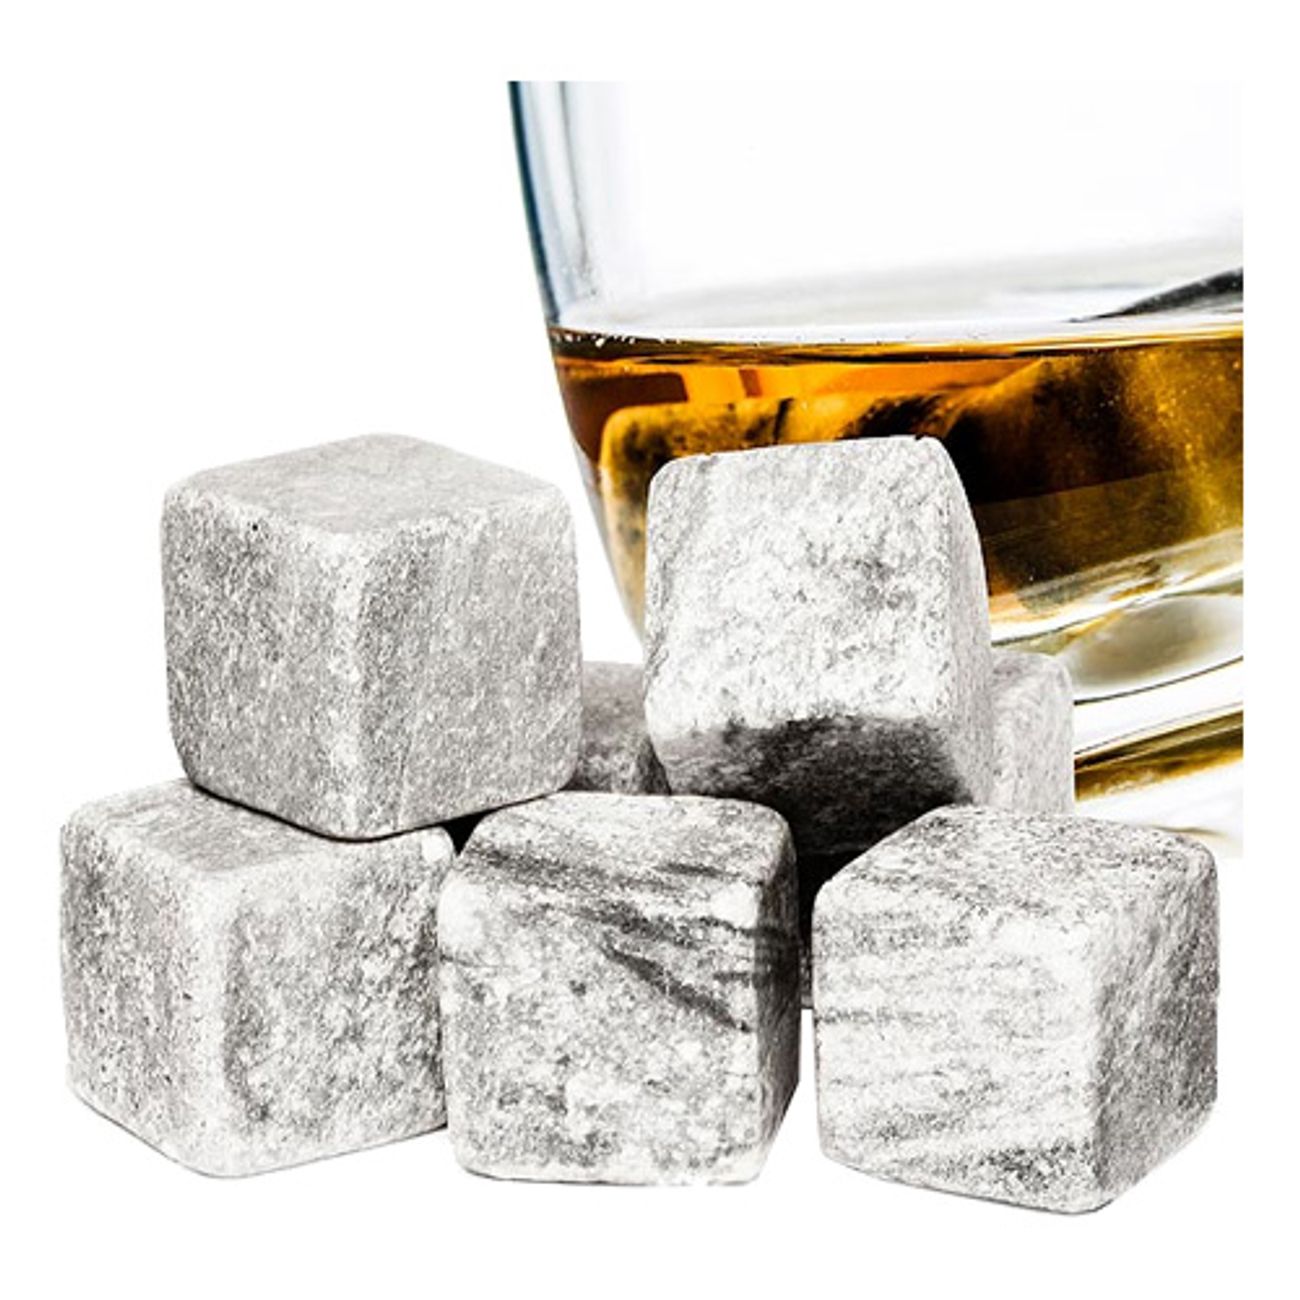 scotch-on-the-rocks-whiskystenar-2